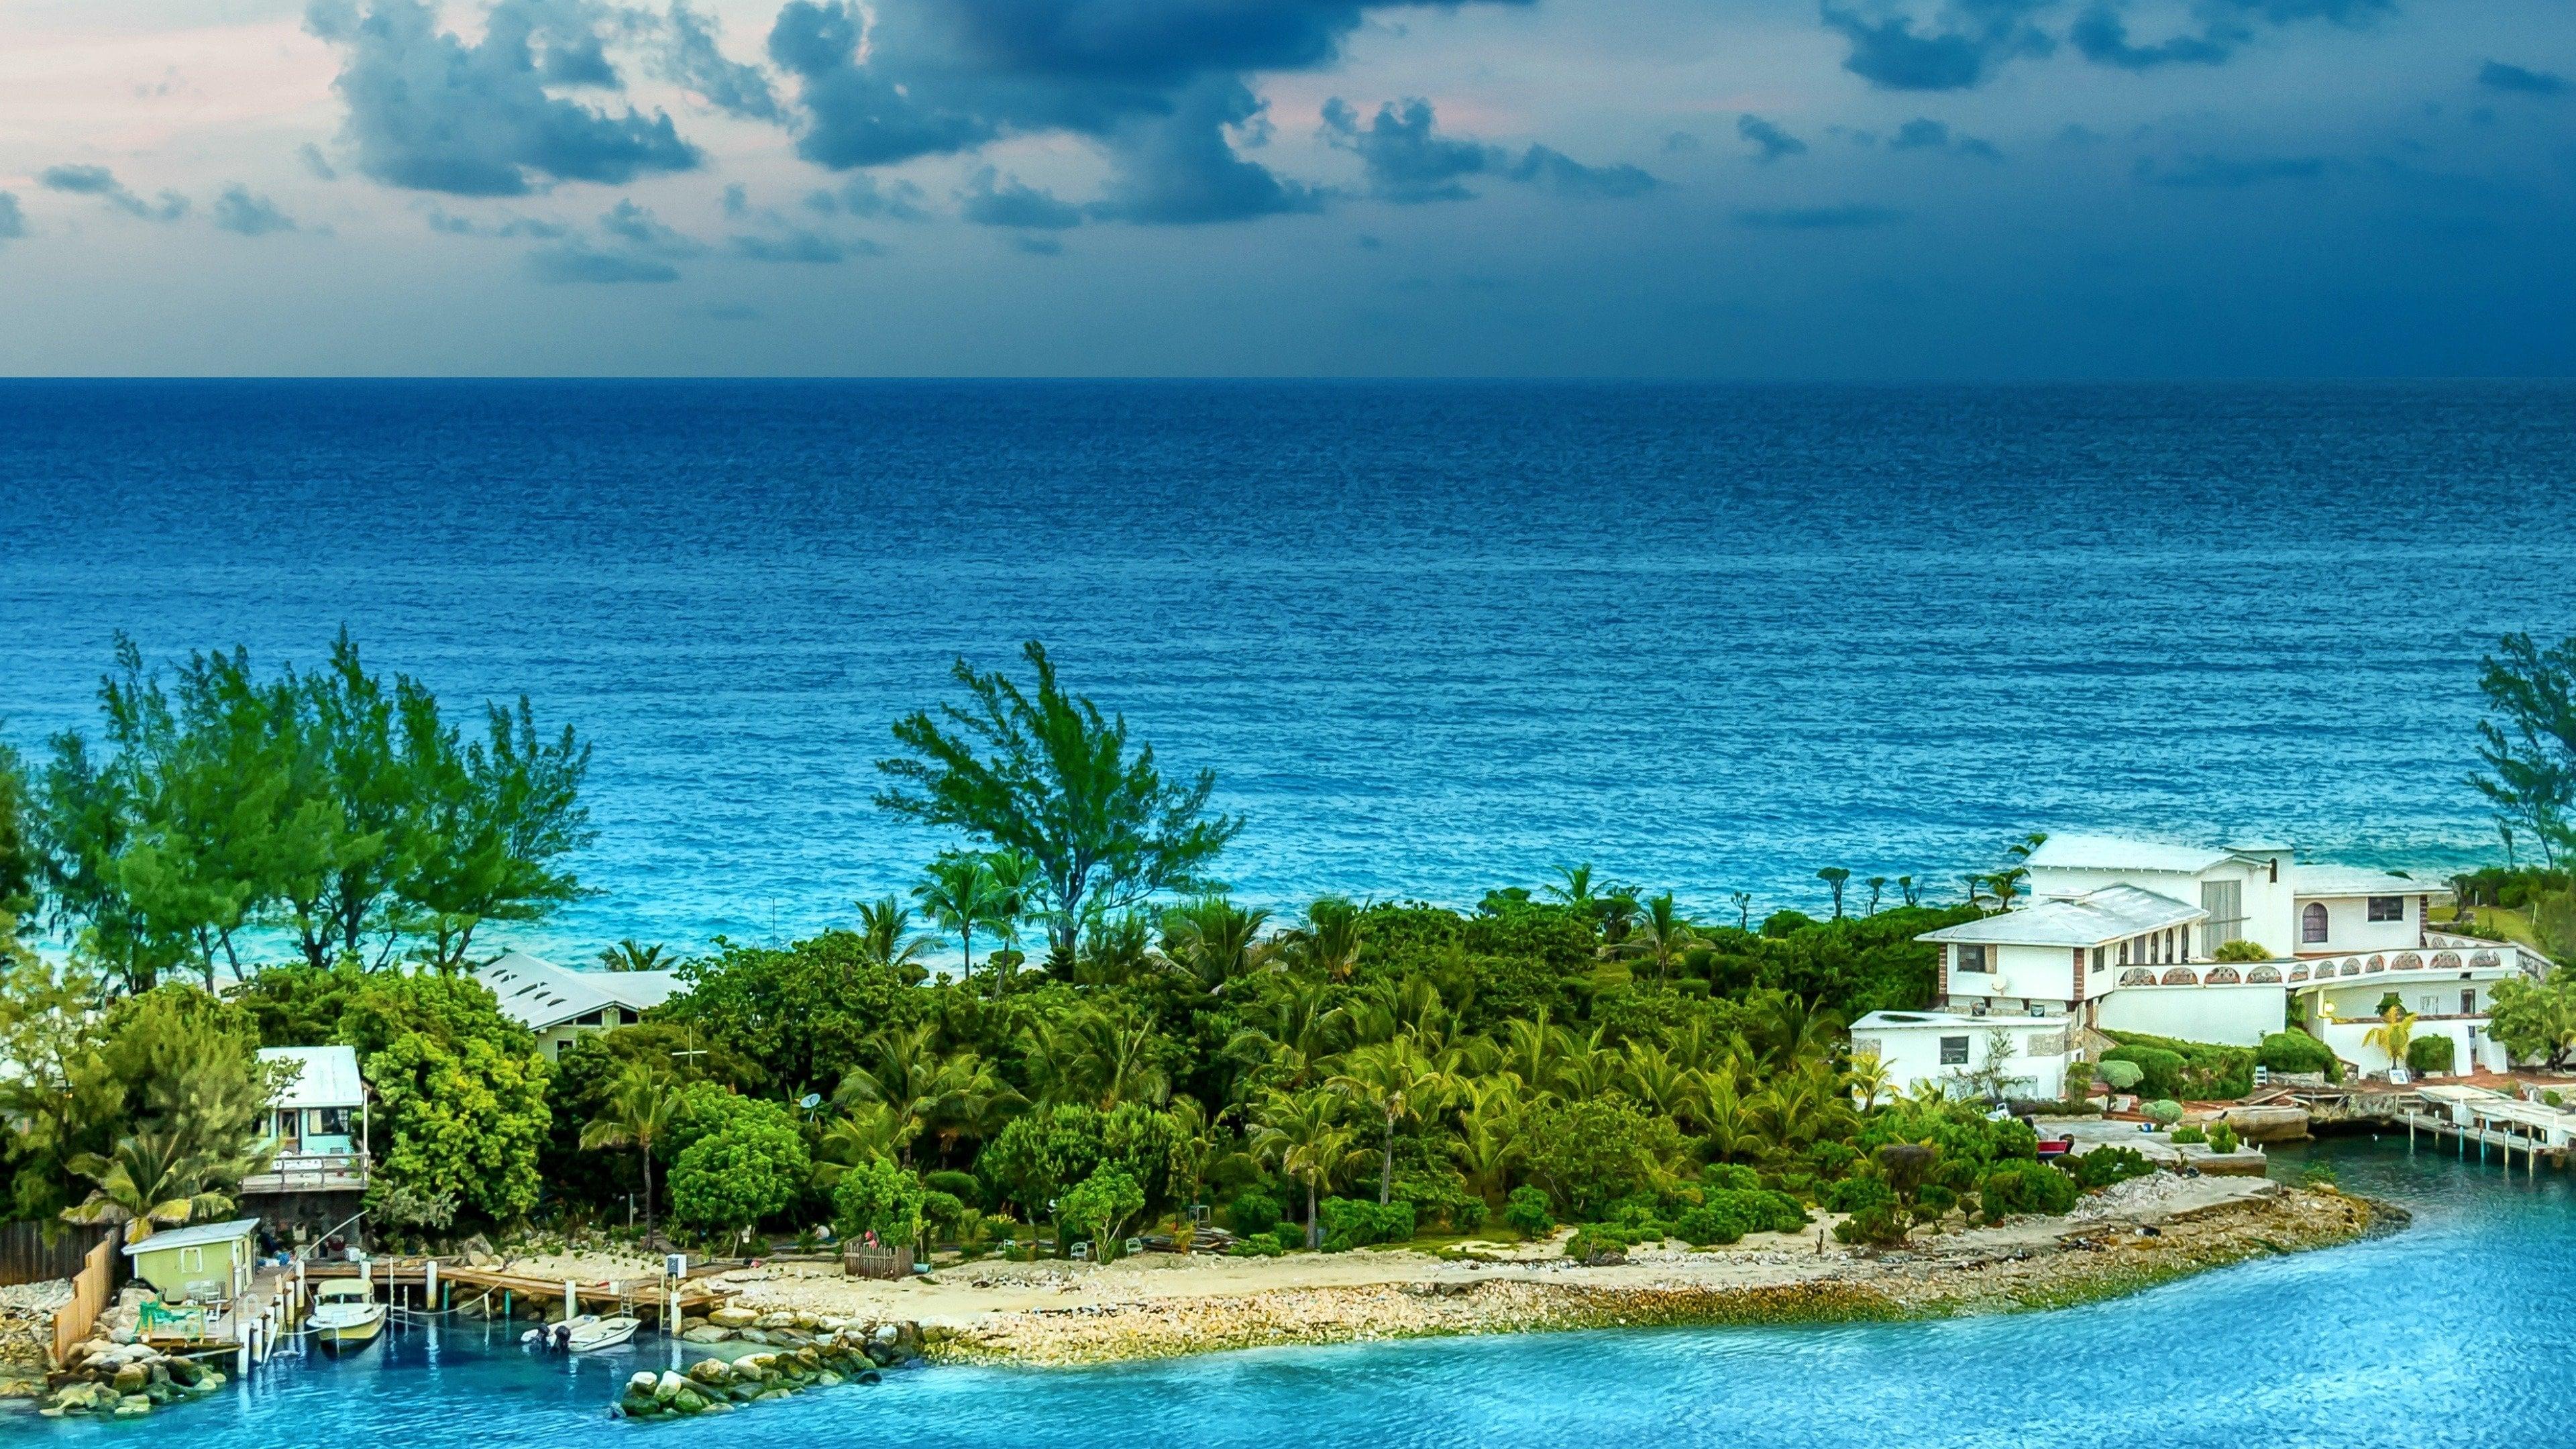 Bahamas Life backdrop